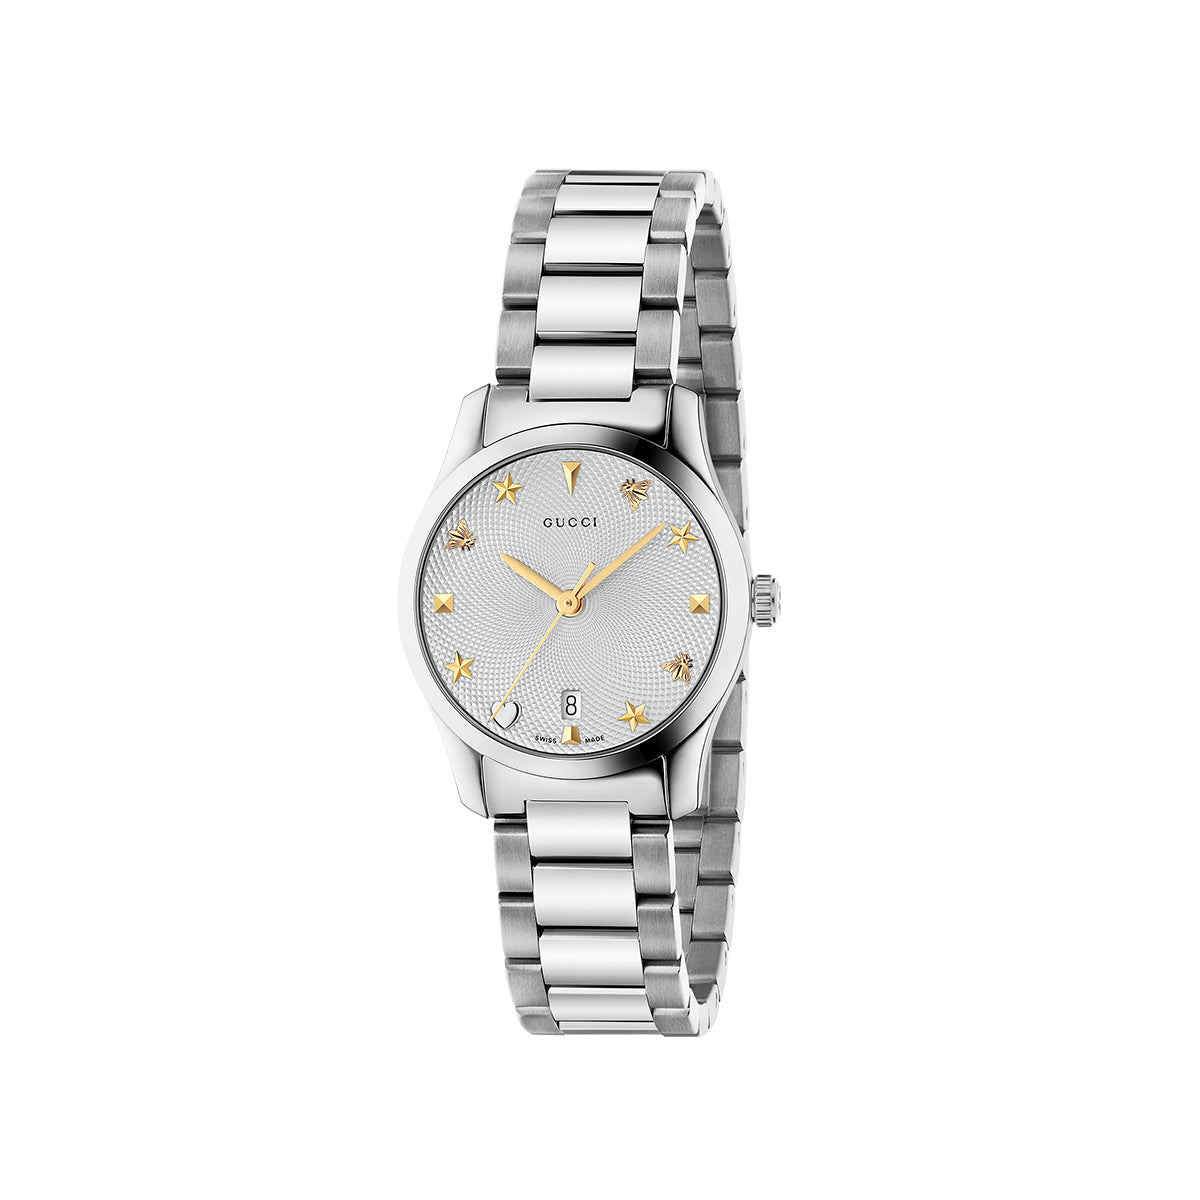 Gucci G-Timeless Quartz 27mm Watch